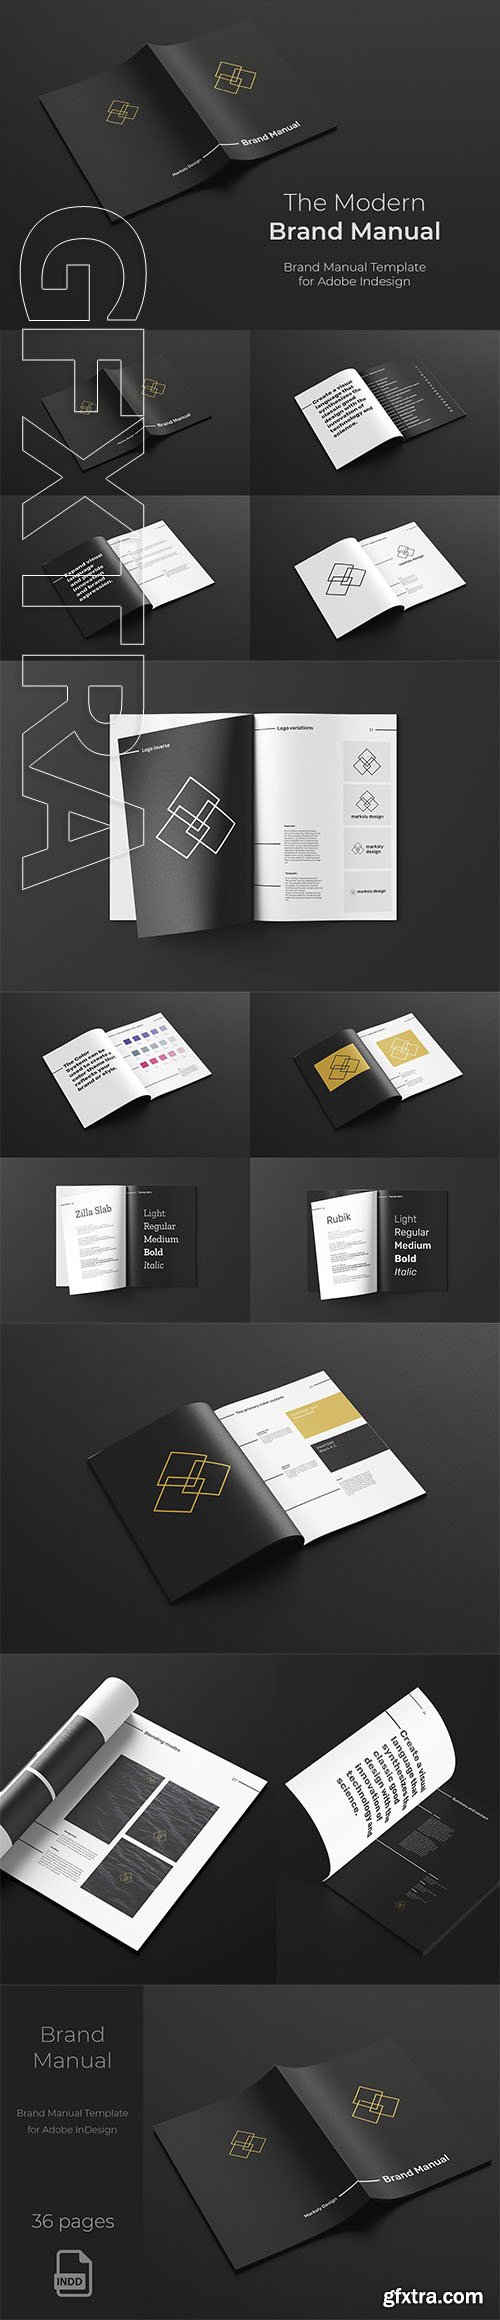 CreativeMarket - The Modern Brand Manual 3395040